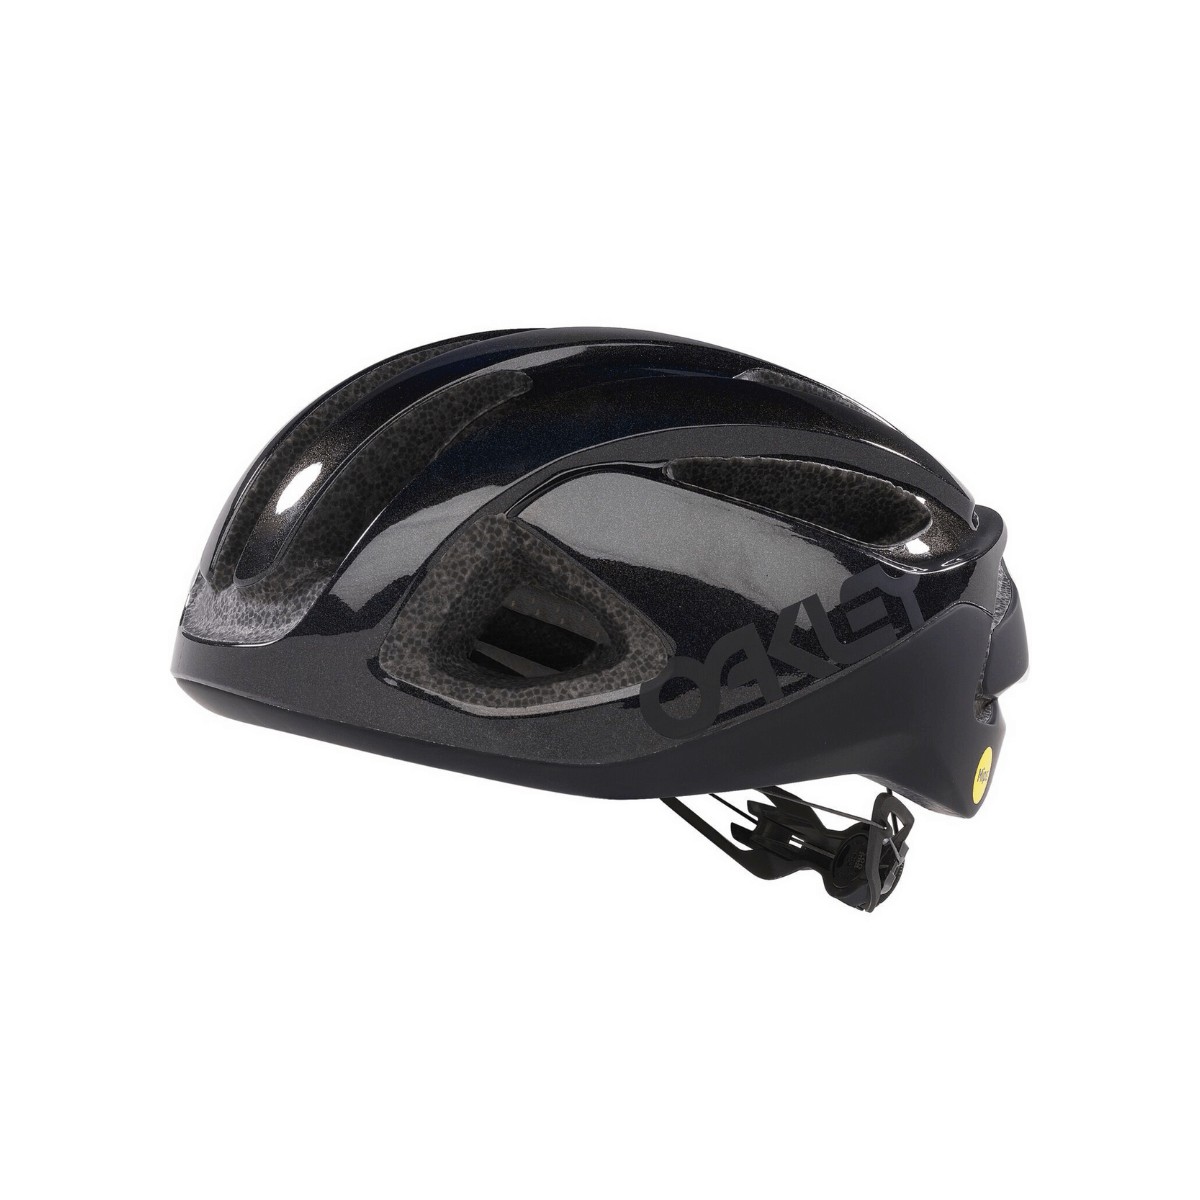 Oakley Aro 3 Black Galaxy Helmet, Size S (52-56 cm)